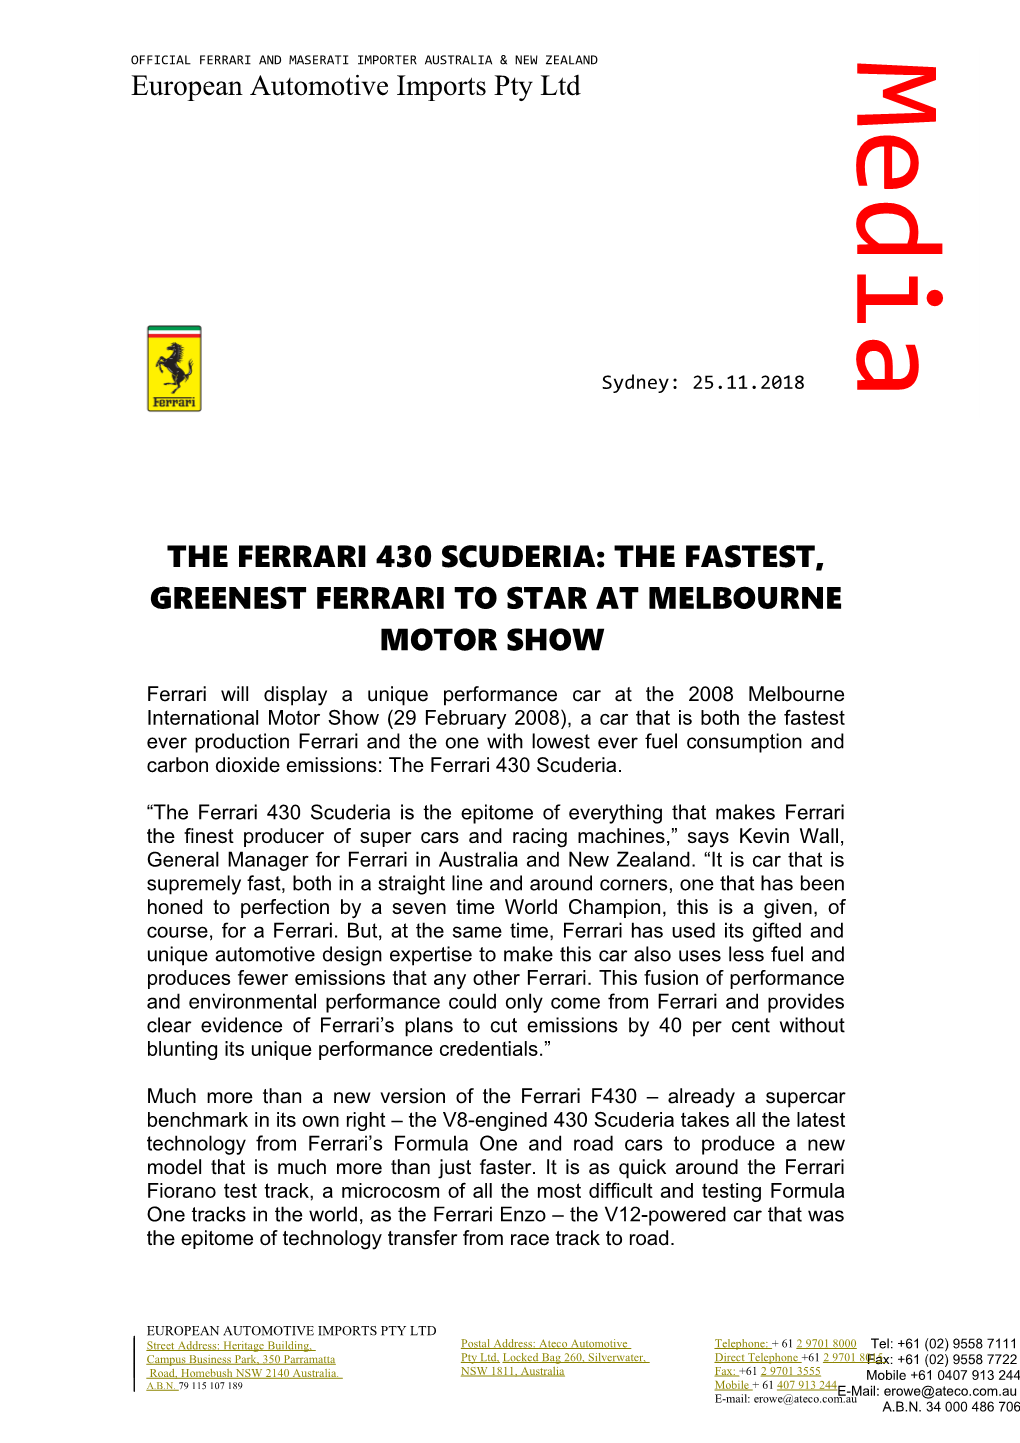 The Ferrari 430 Scuderia: the Fastest, Greenest Ferrari to Star at Melbourne Motor Show